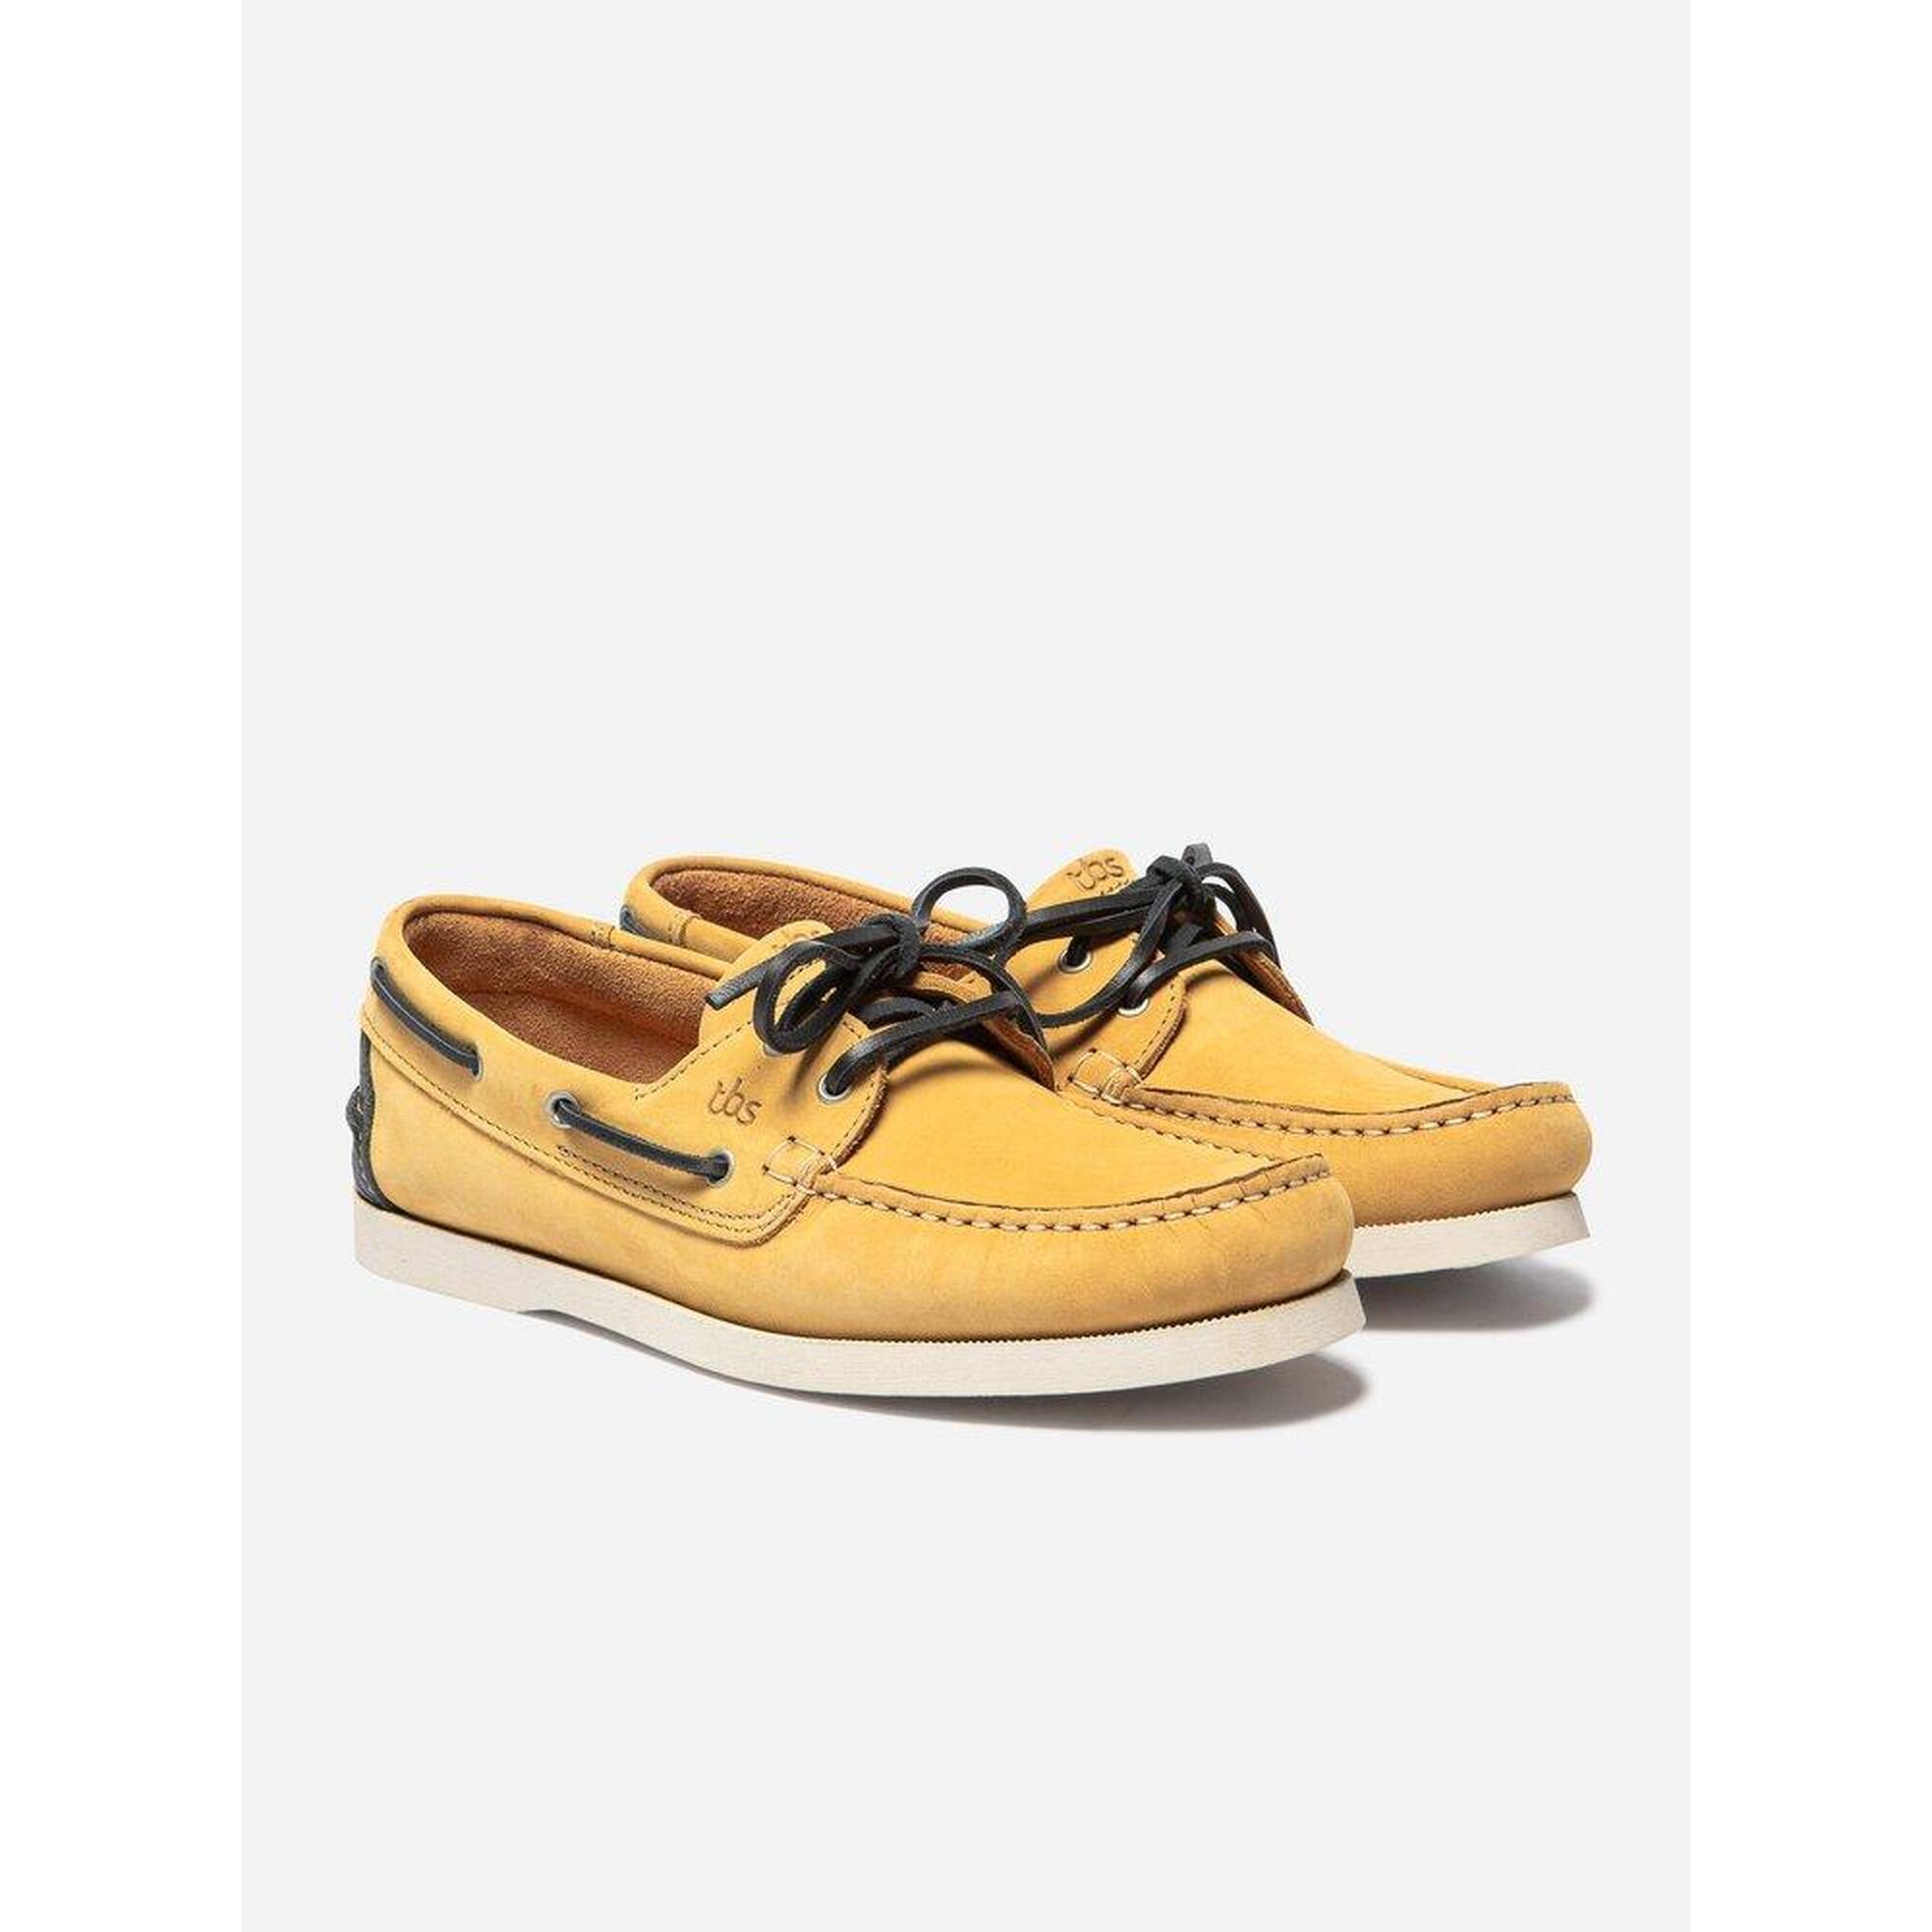 Pantofi pentru navigatie Phenis - galben barbati